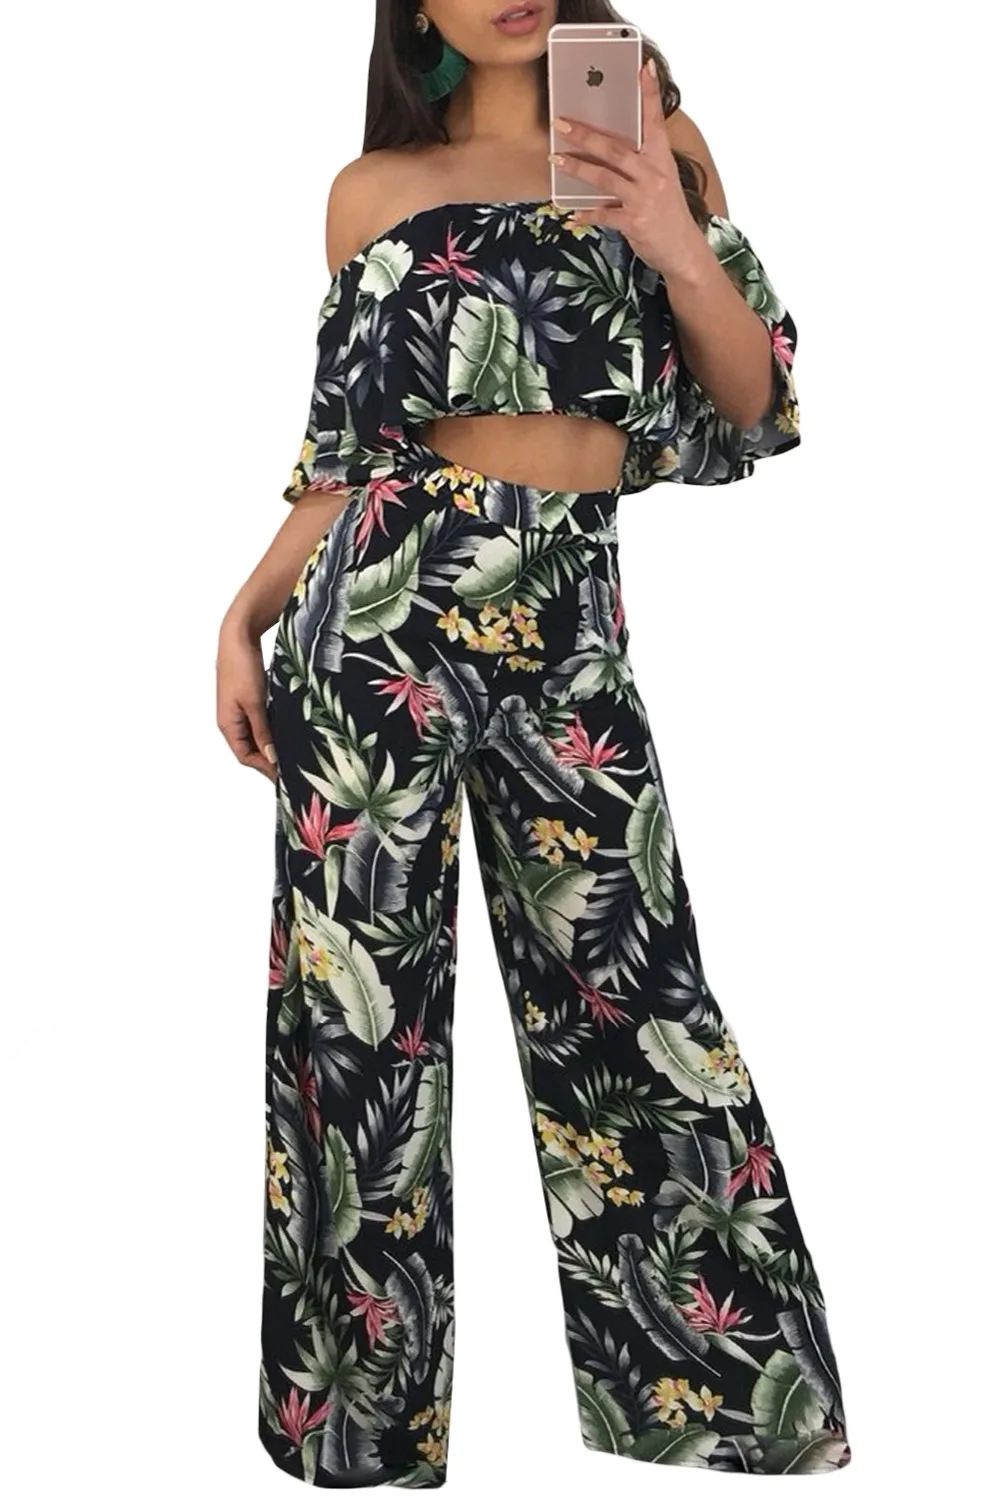 2018 New Arrival Summer Women's Casual Tropical Print Ruffle Crop Top ...